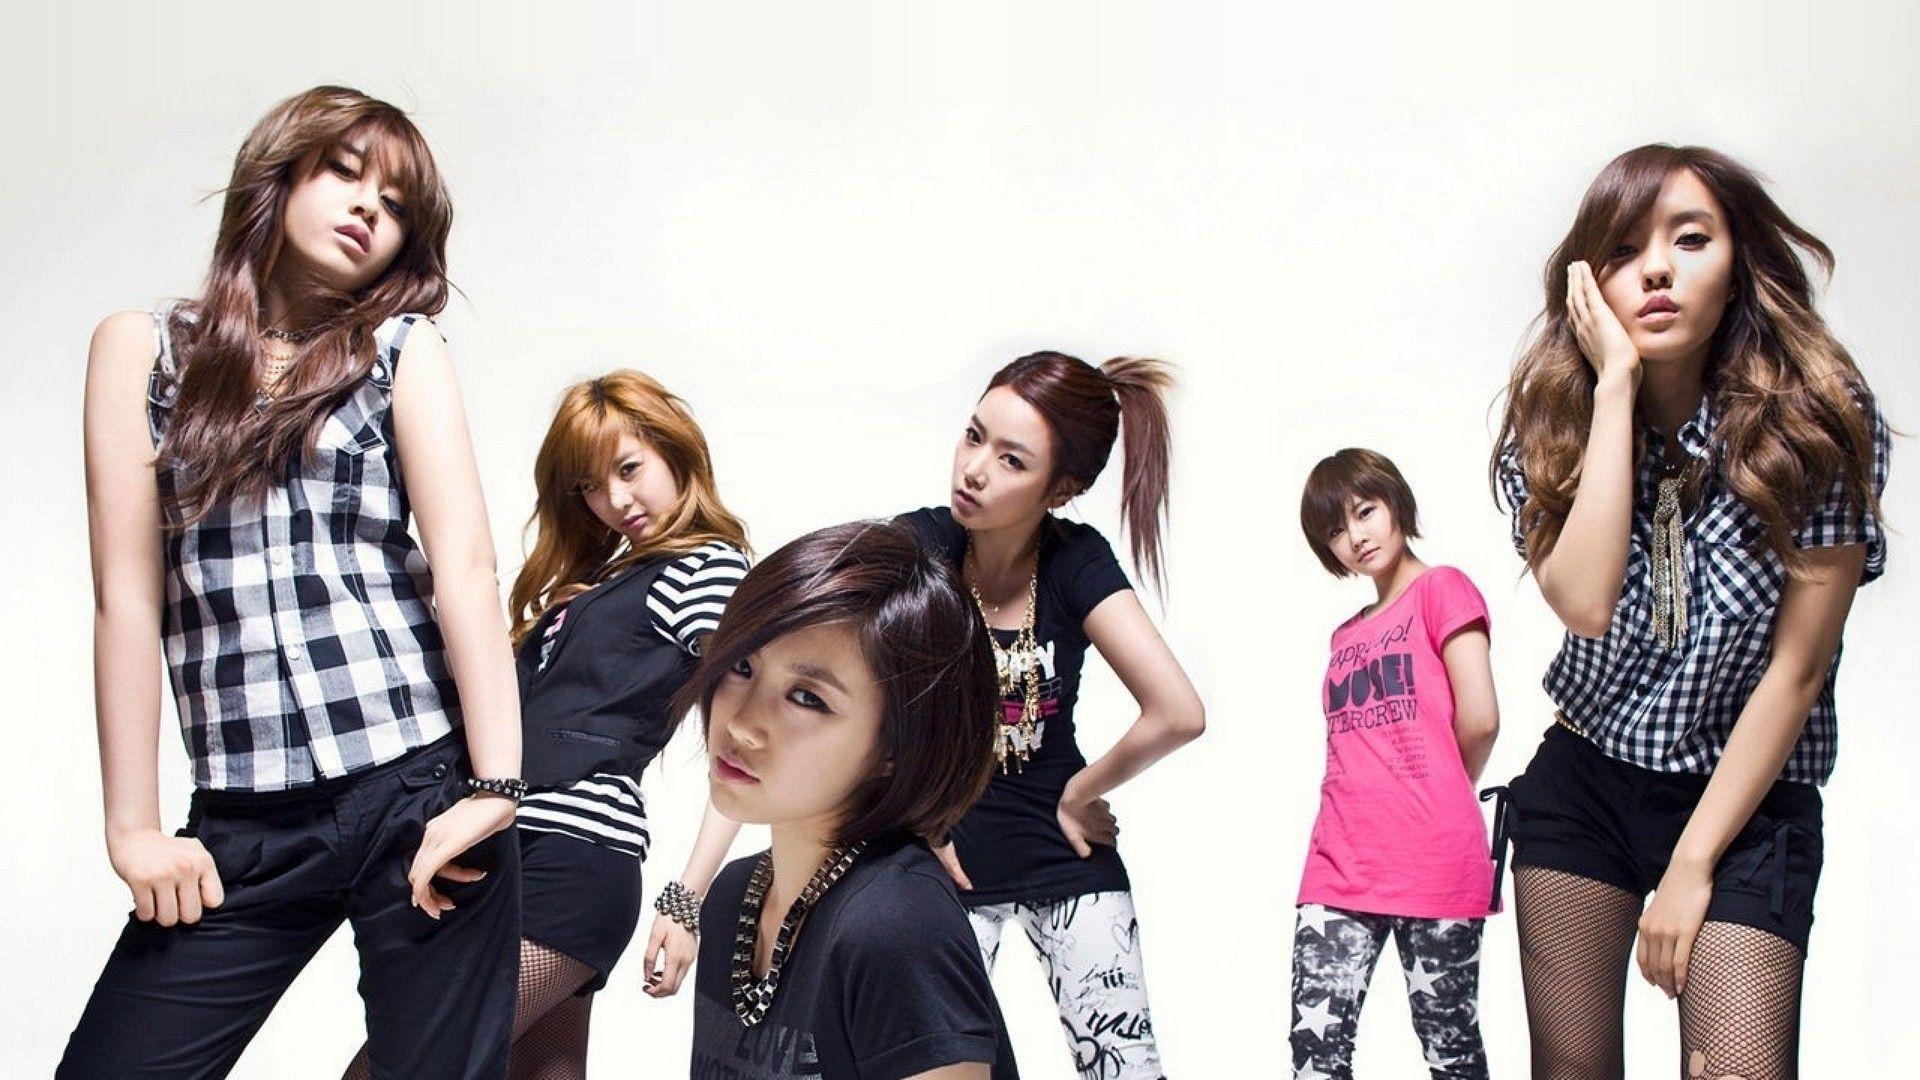 V t group. Группа t-Ara. T -Ara &Davichi корейская группа. Участницы группы t-Ara.